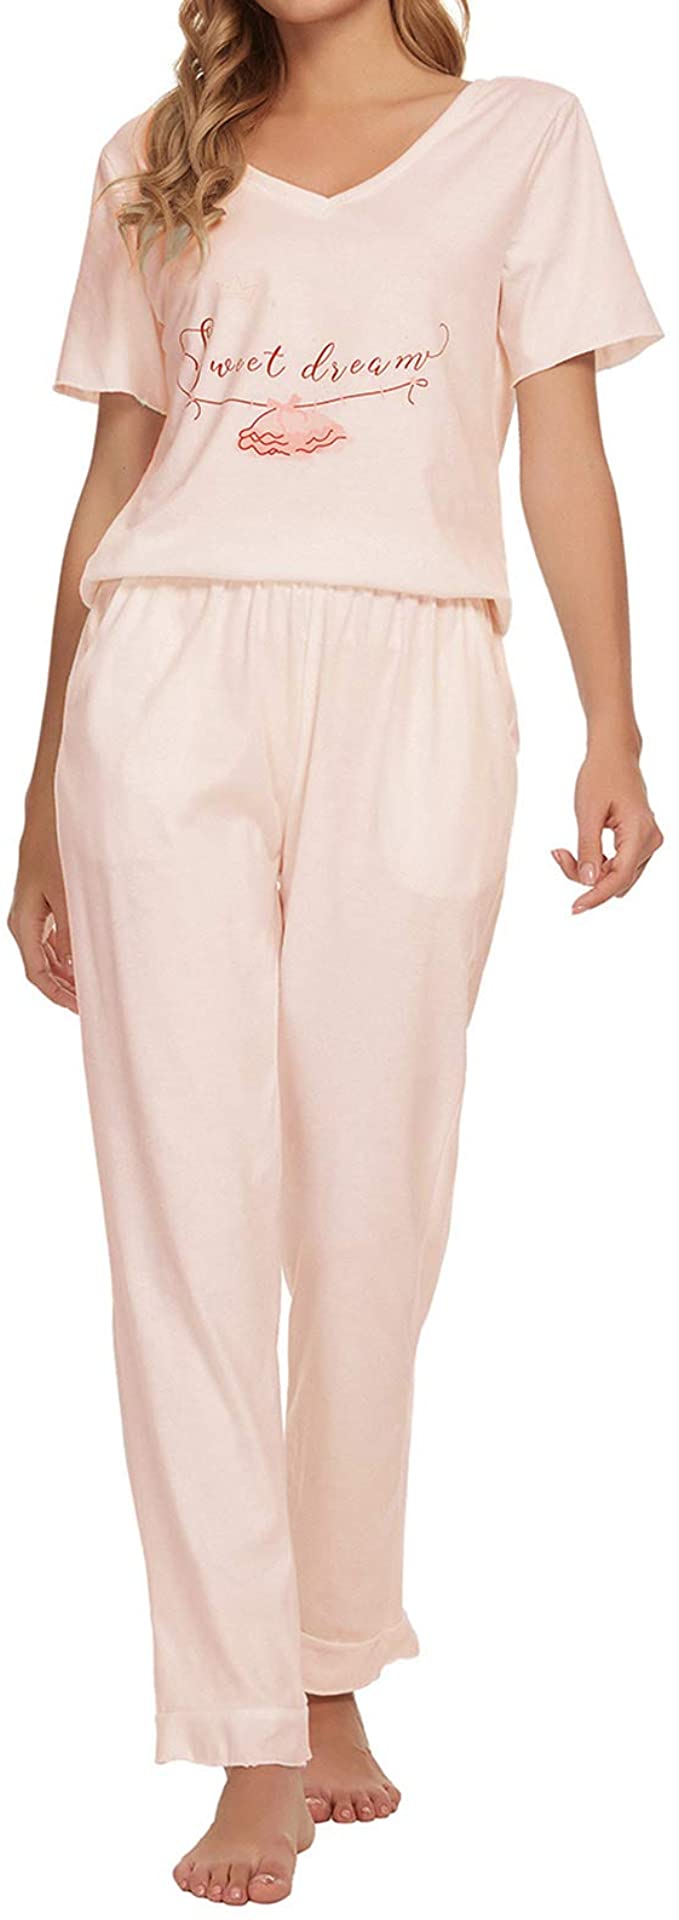 TOP-MAX Womens Pajama Set Short Sleeve Sleepwear Nightwear Soft Pjs Lounge Sets S-XXXL